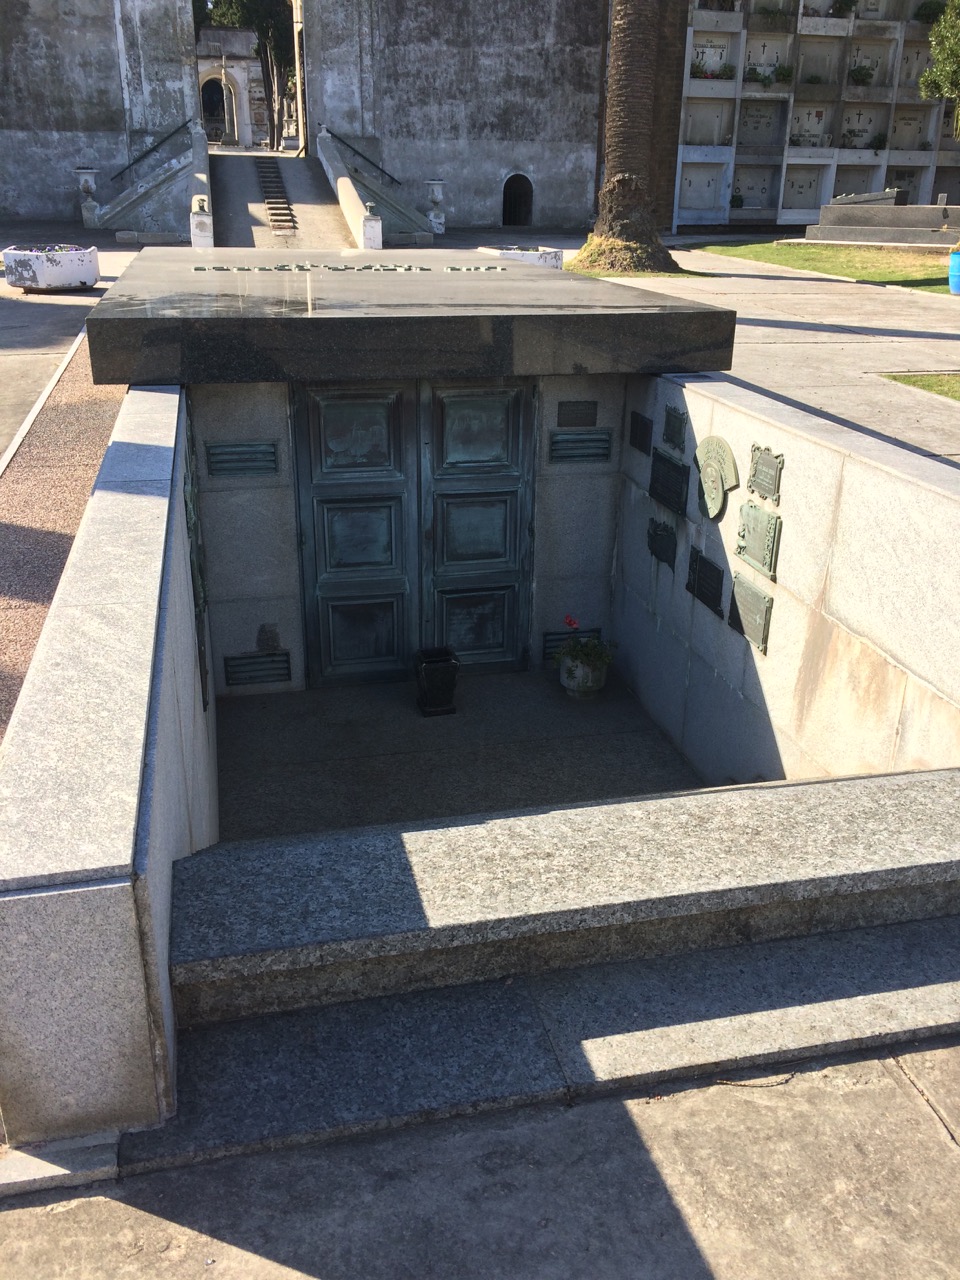 The tomb of Luis Batlle Berres